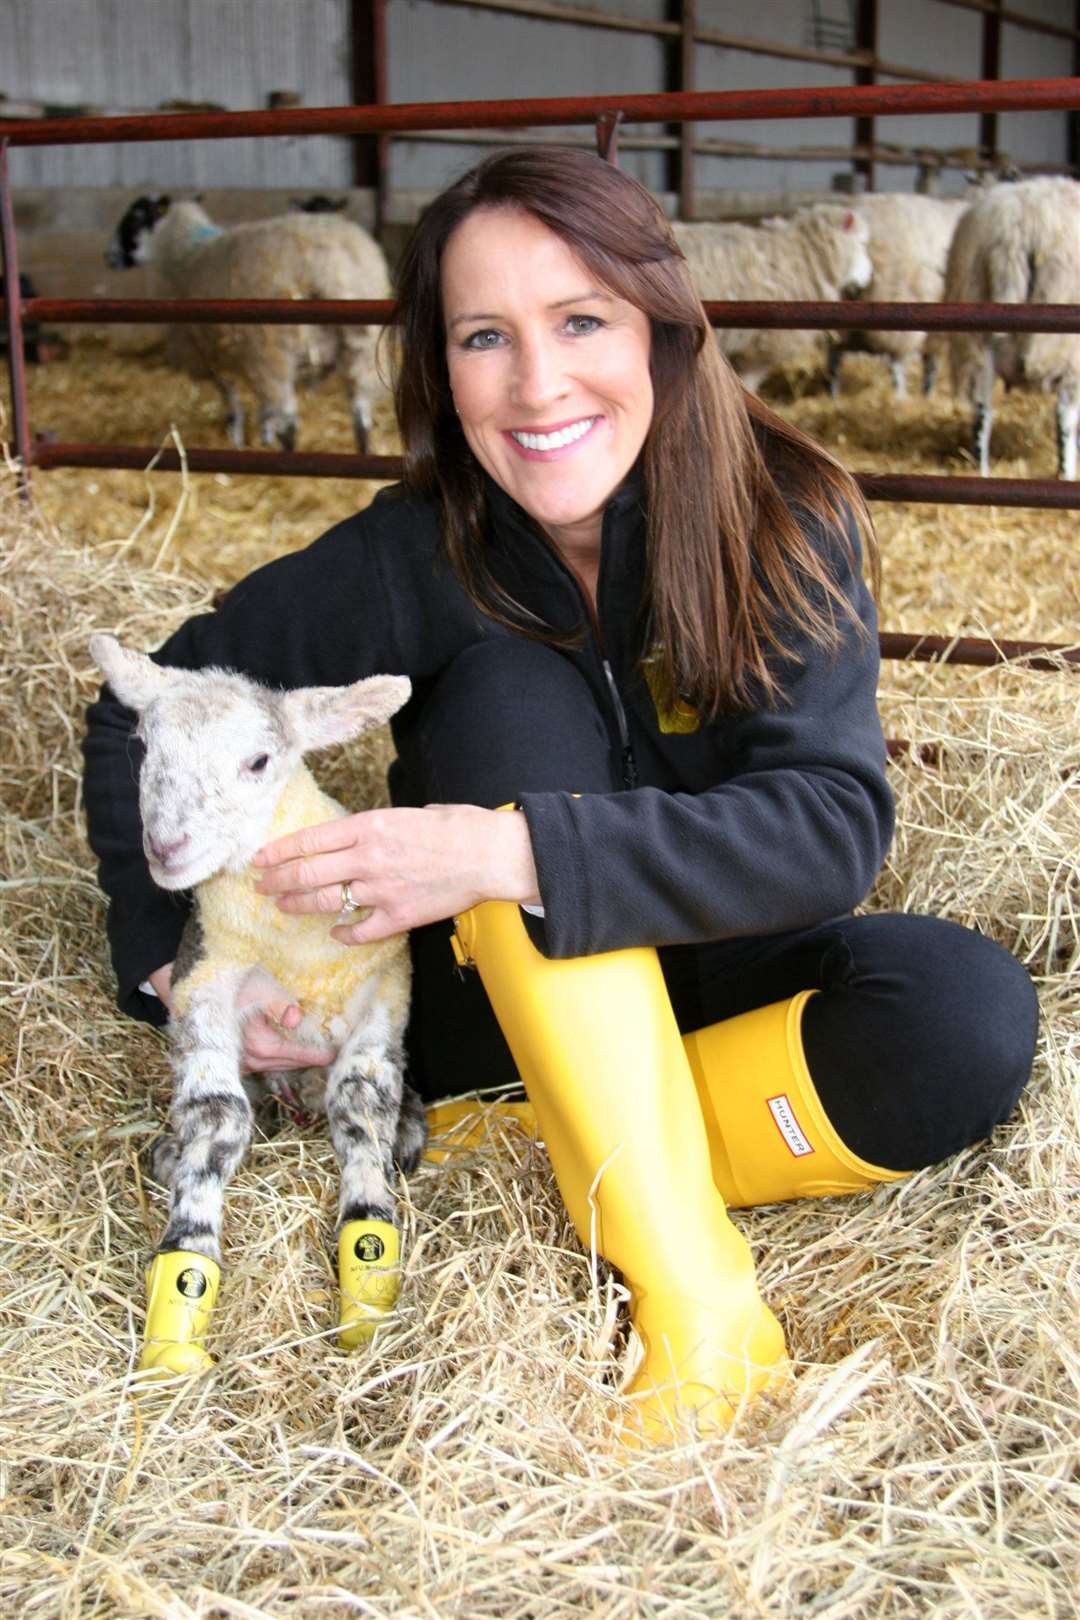 Stephanie Berkeley, of the Farm Safety Foundation